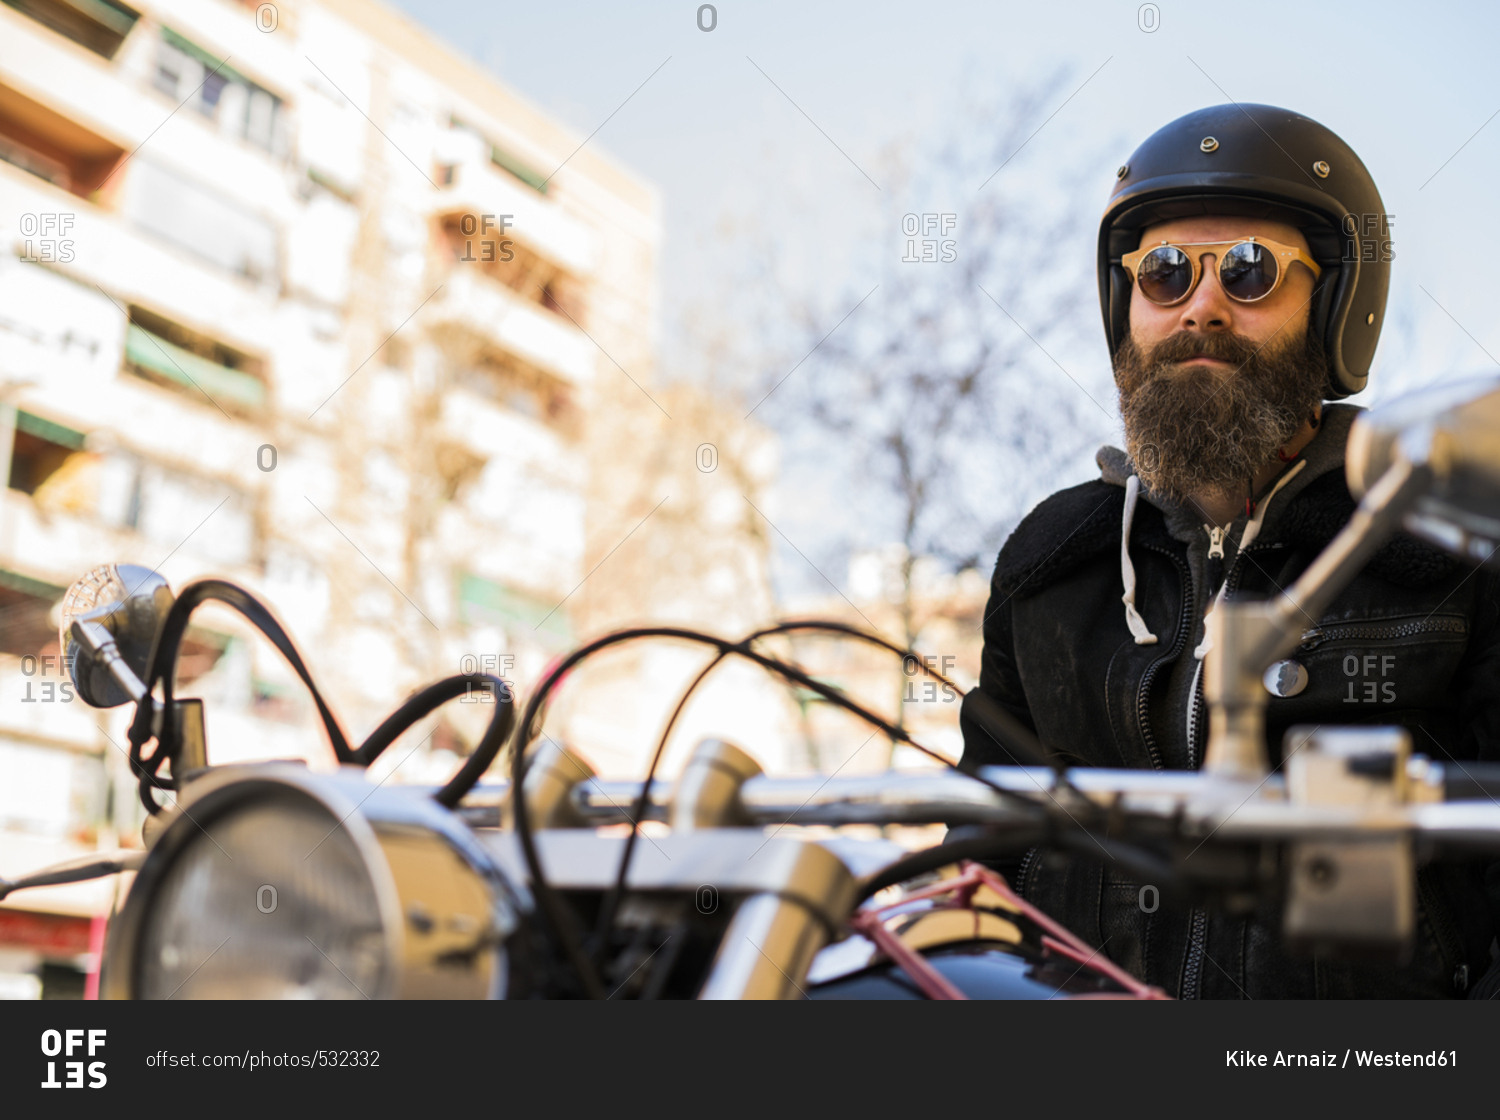 Portrait of bearded biker wearing helmet and sunglasses sitting on his motorcycle